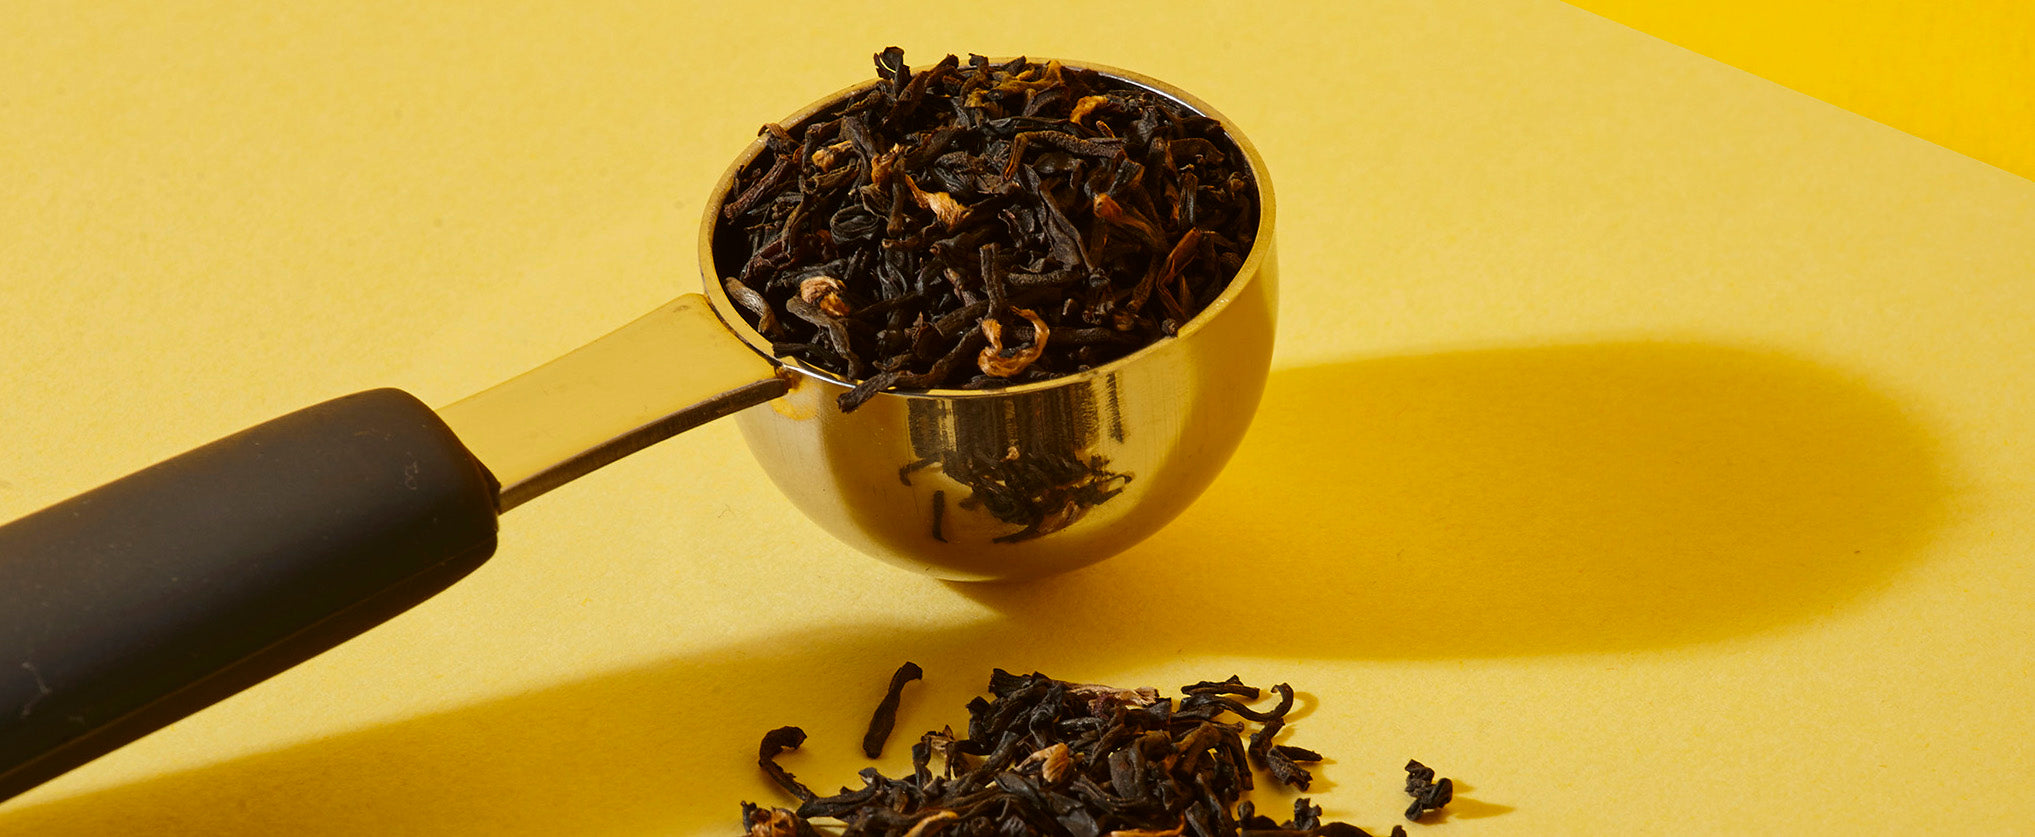 Perfect Serve Tea Spoon  Perfect Measure to Brew Loose Leaf Tea